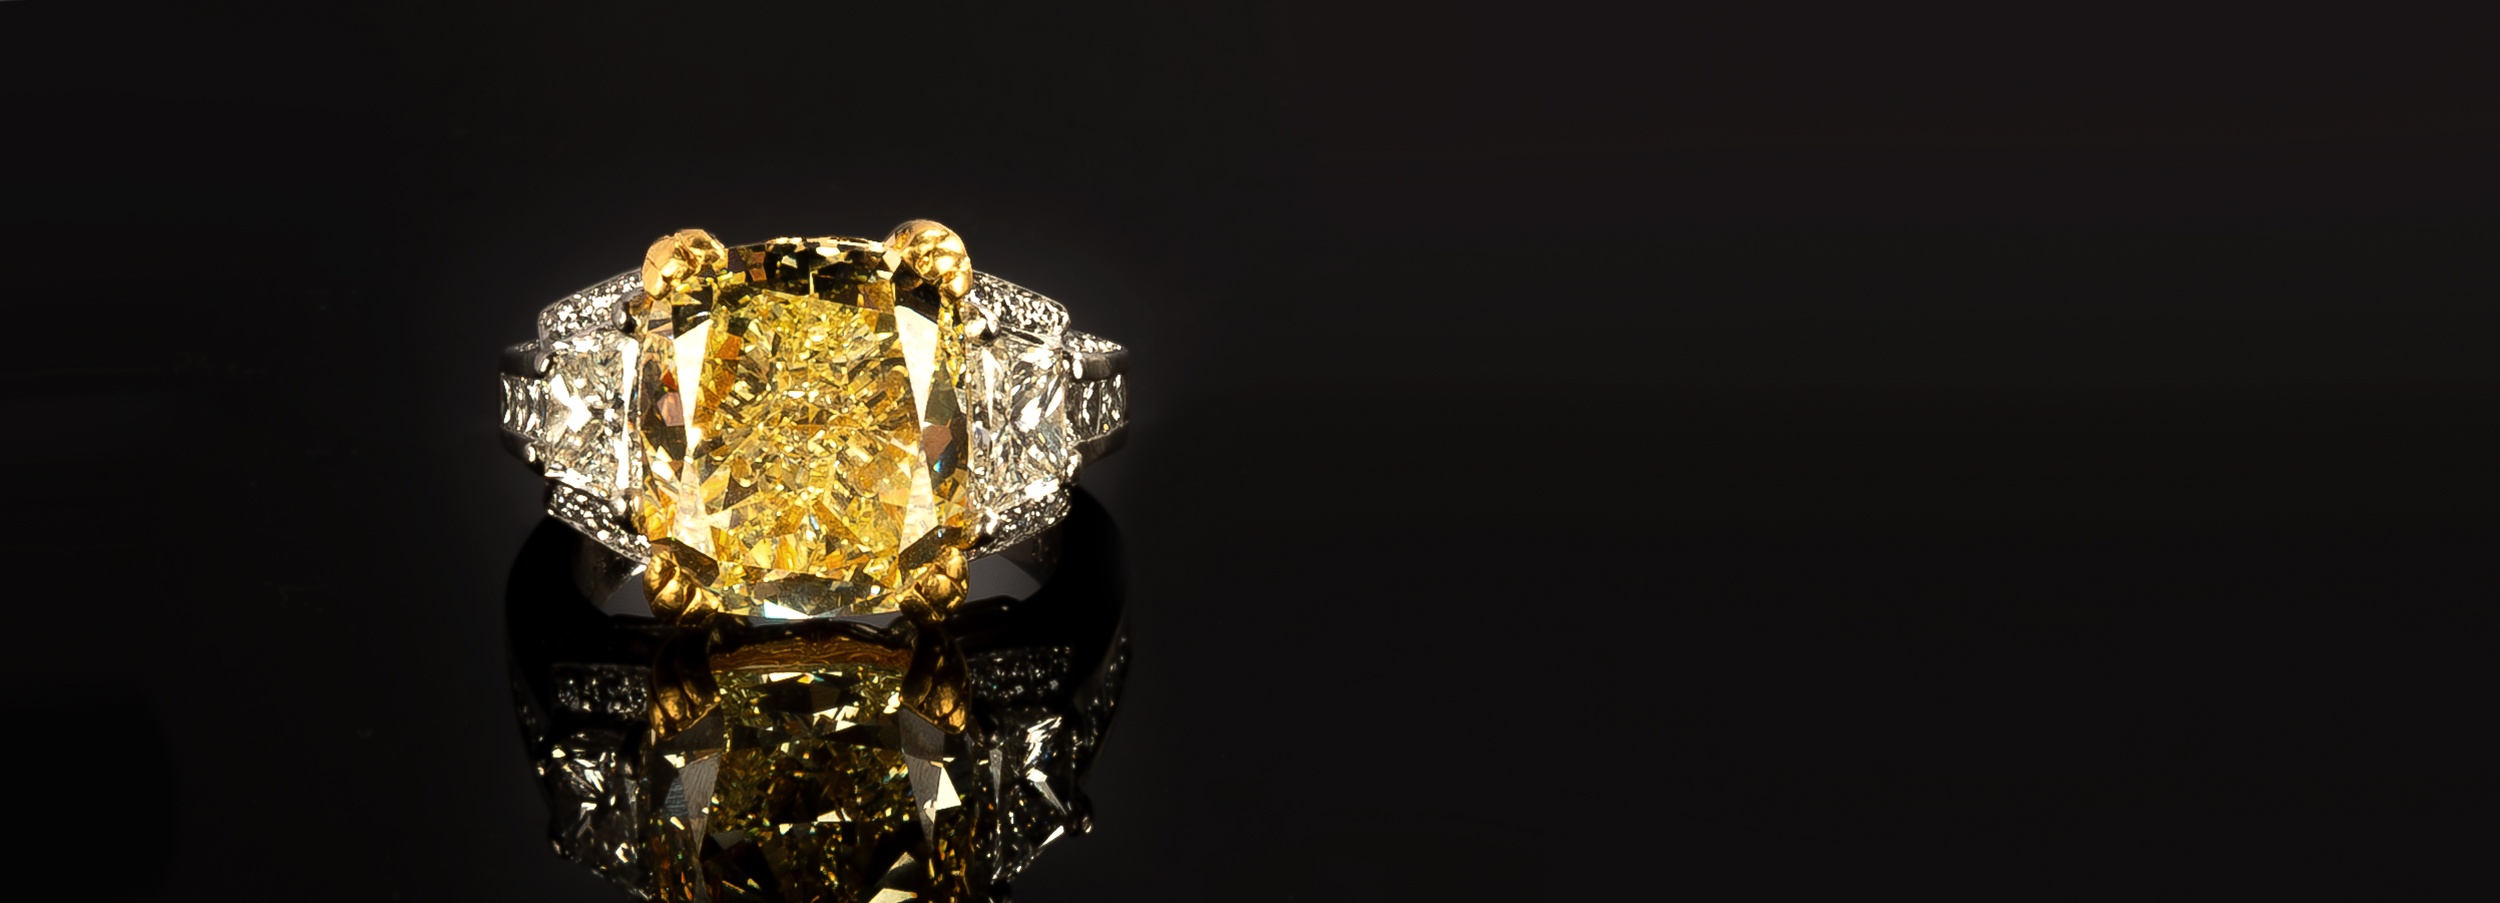 10 Carat Fancy Yellow Diamond Ring